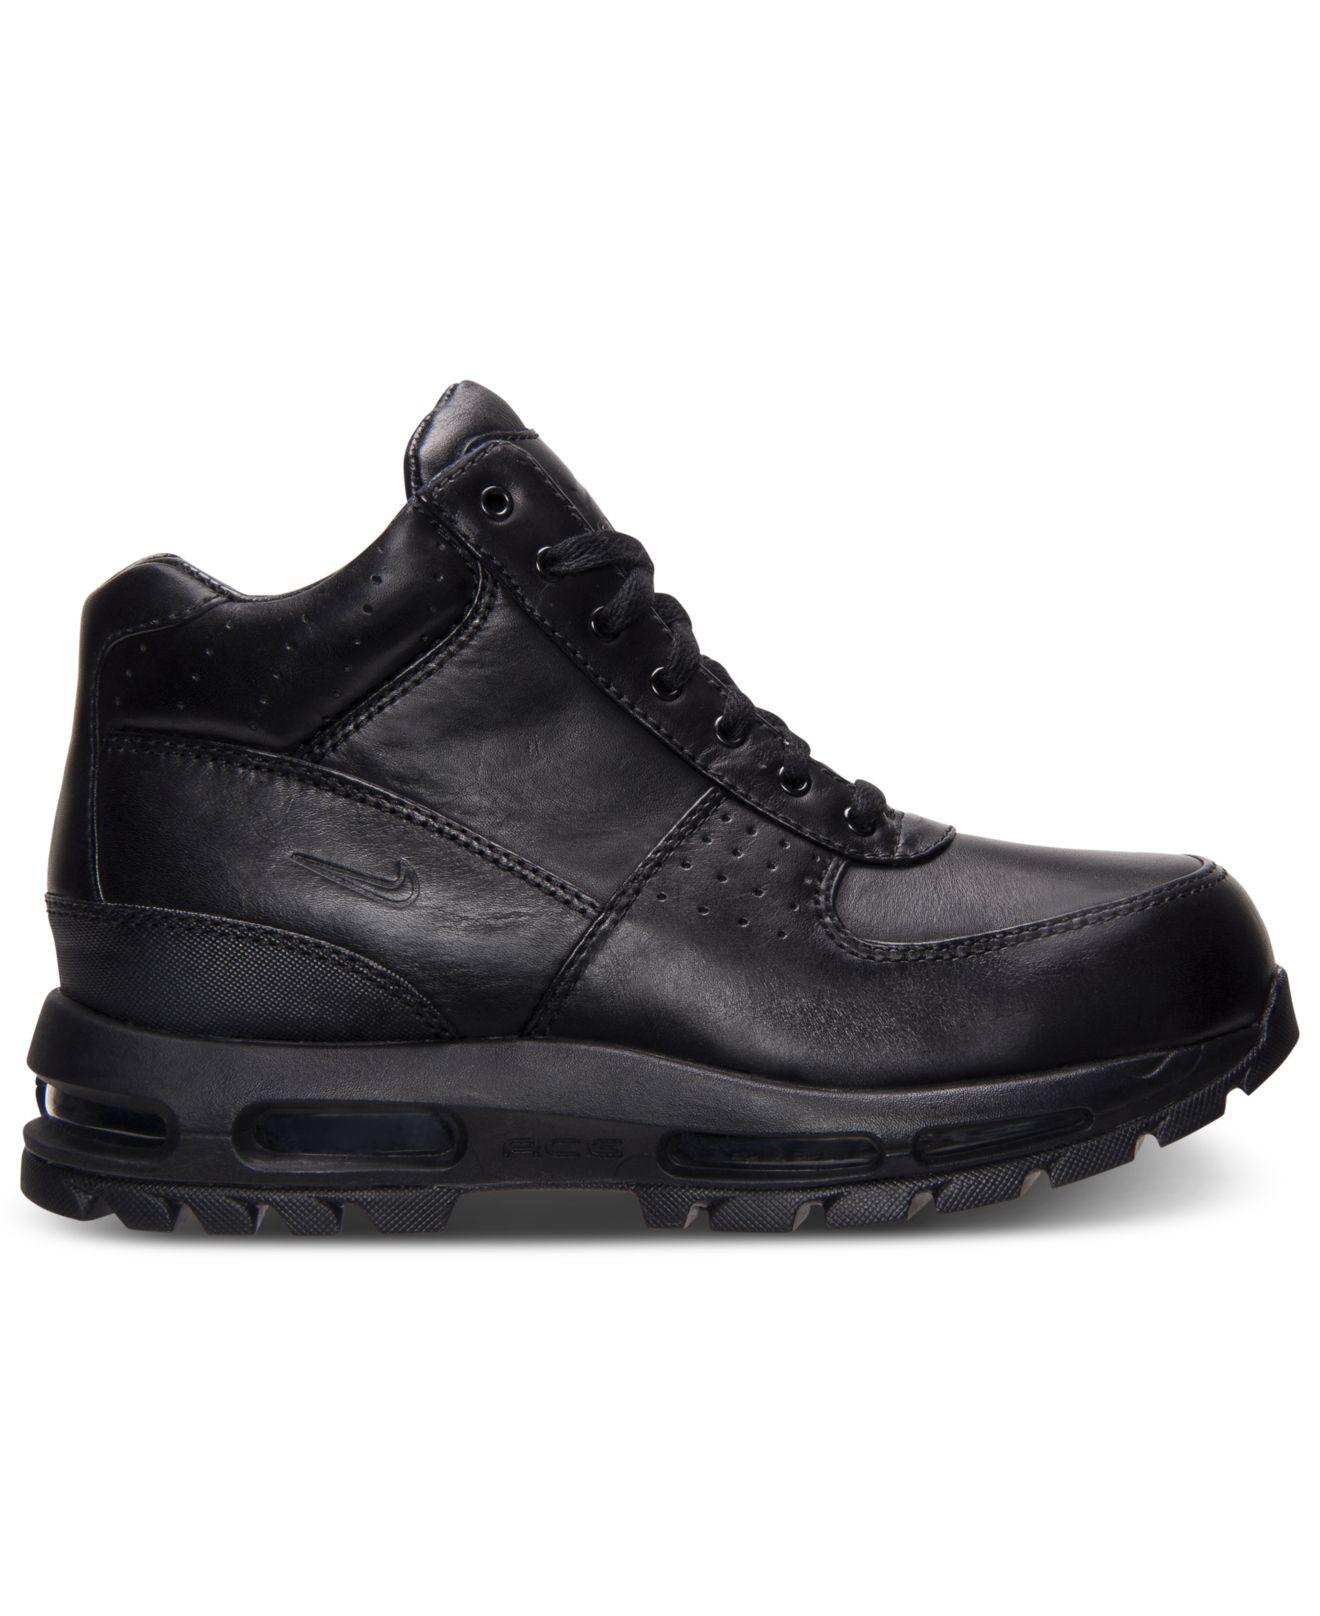 Nike Air Max Goadome Boots in Black/Black (Black) for Men - Lyst